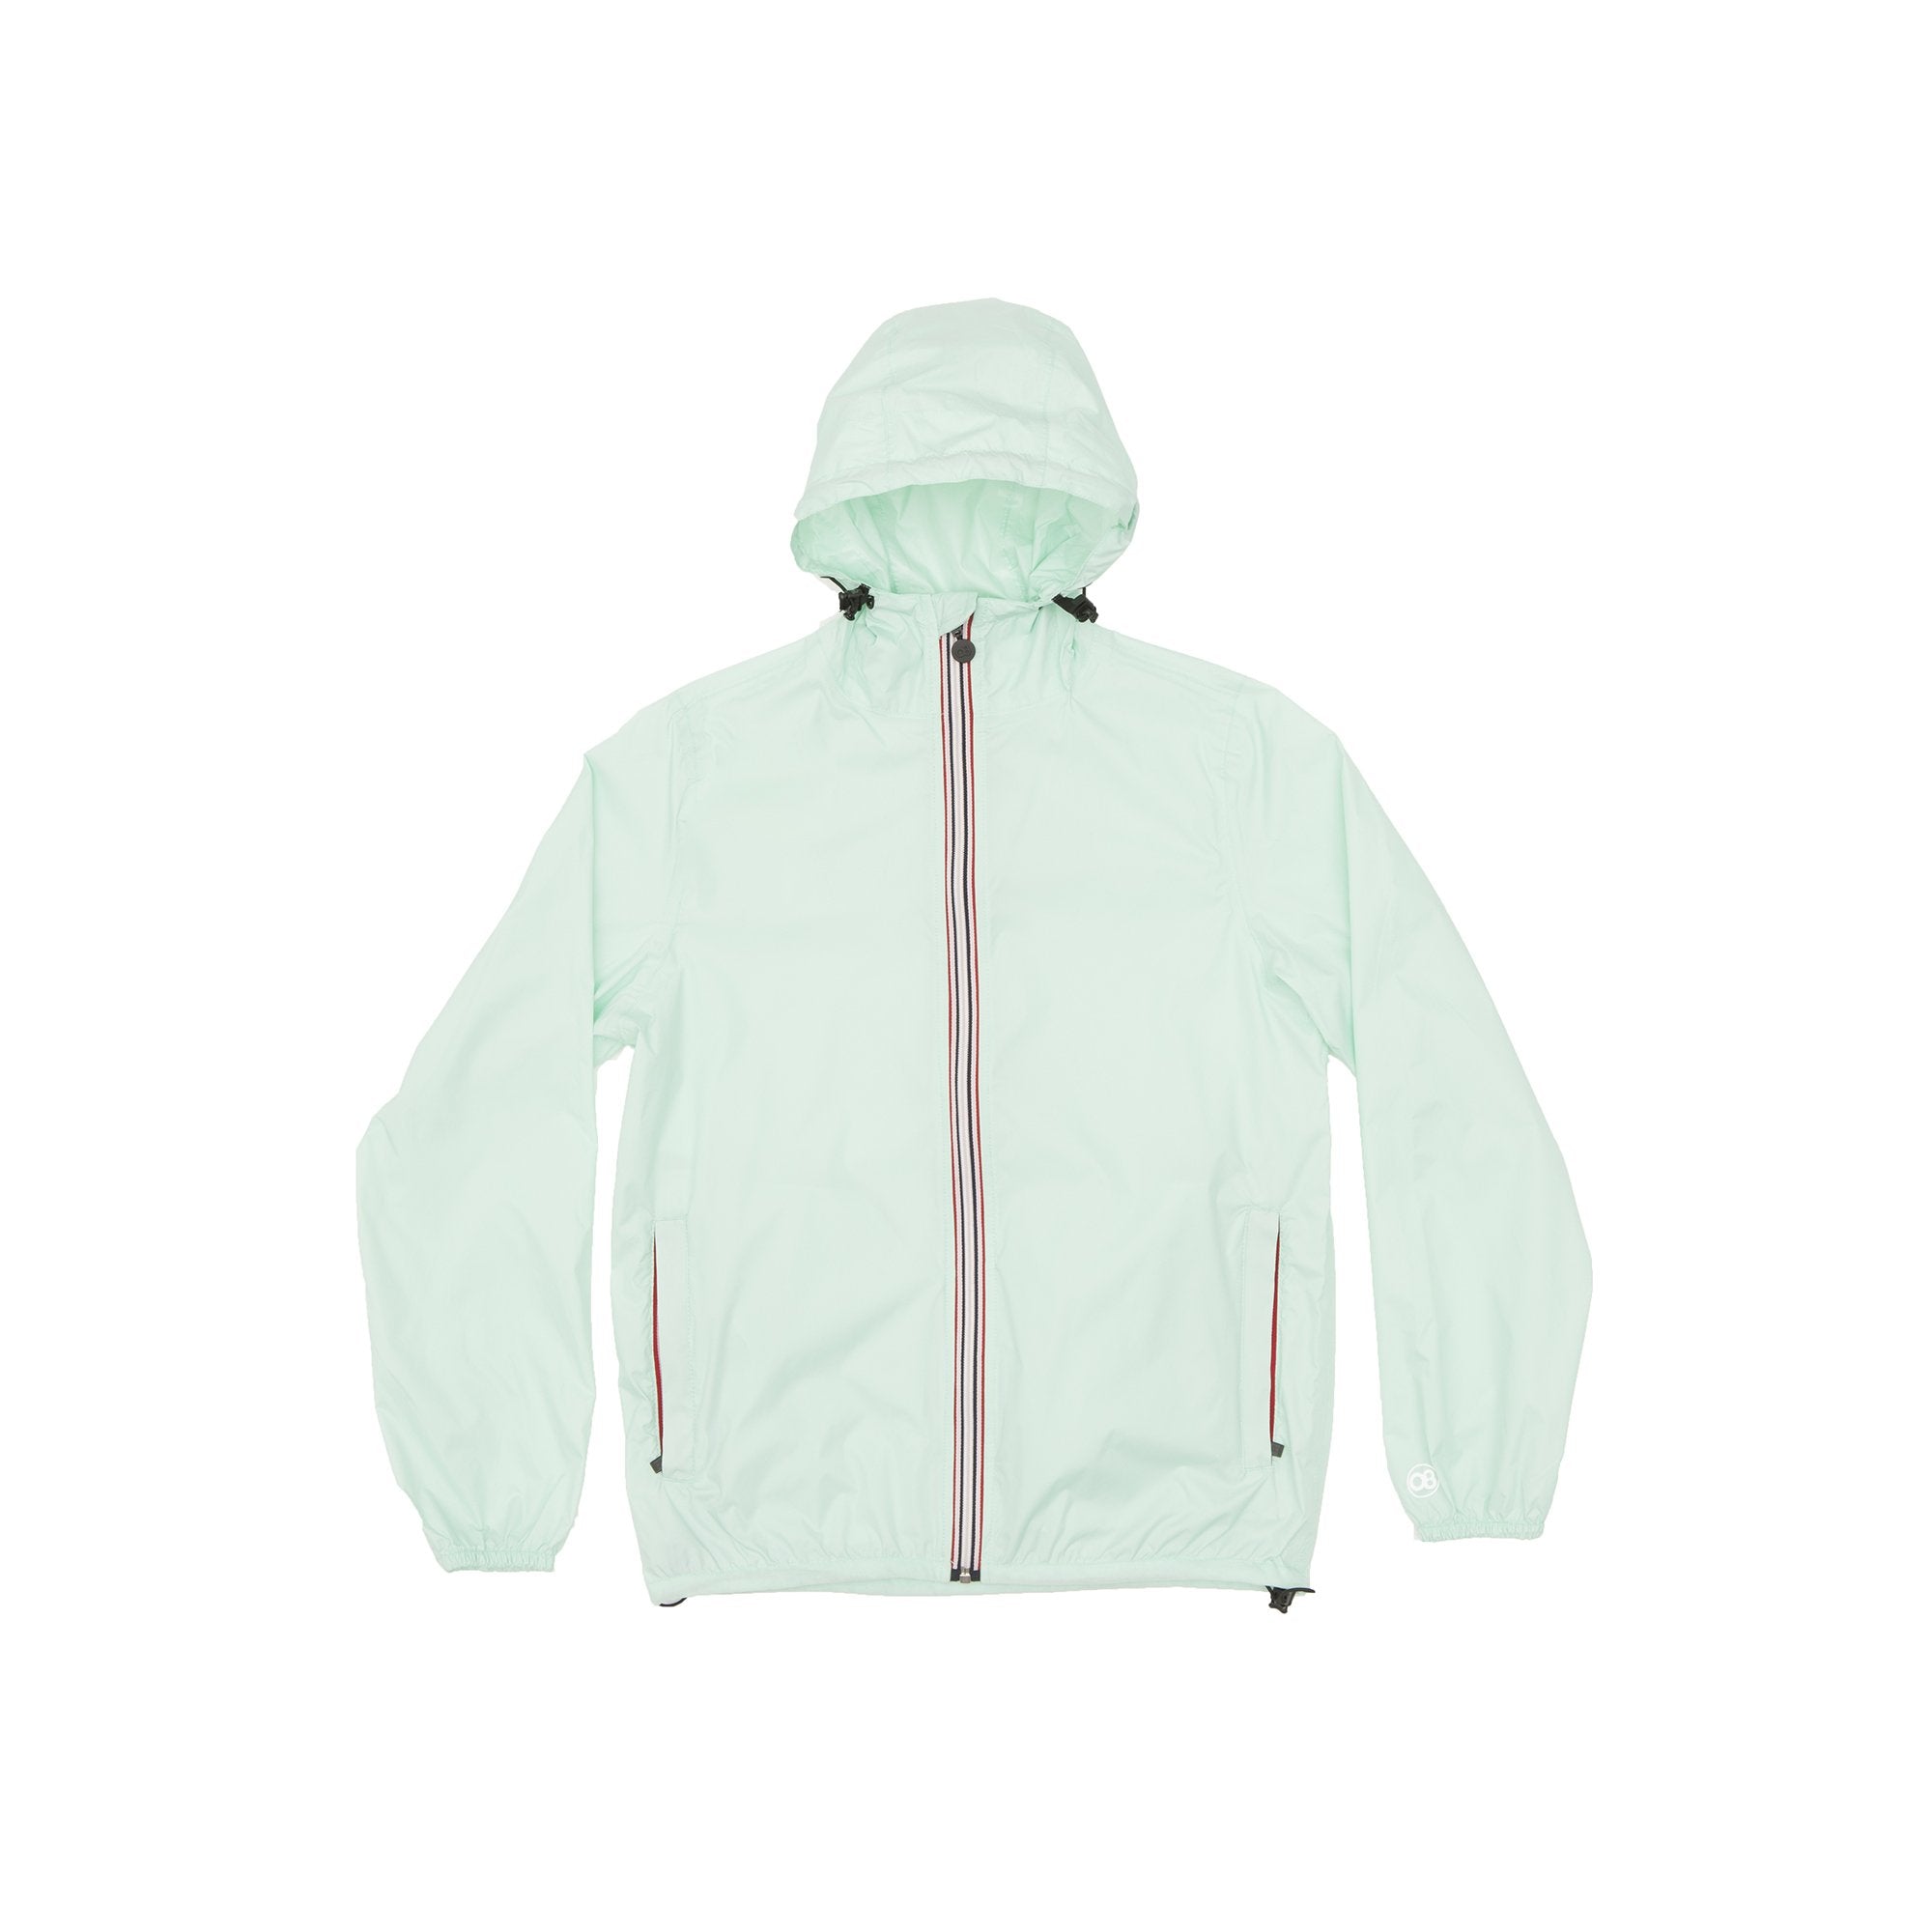 Sloane - Mint Full Zip Packable Rain Jacket - O8lifestyle.